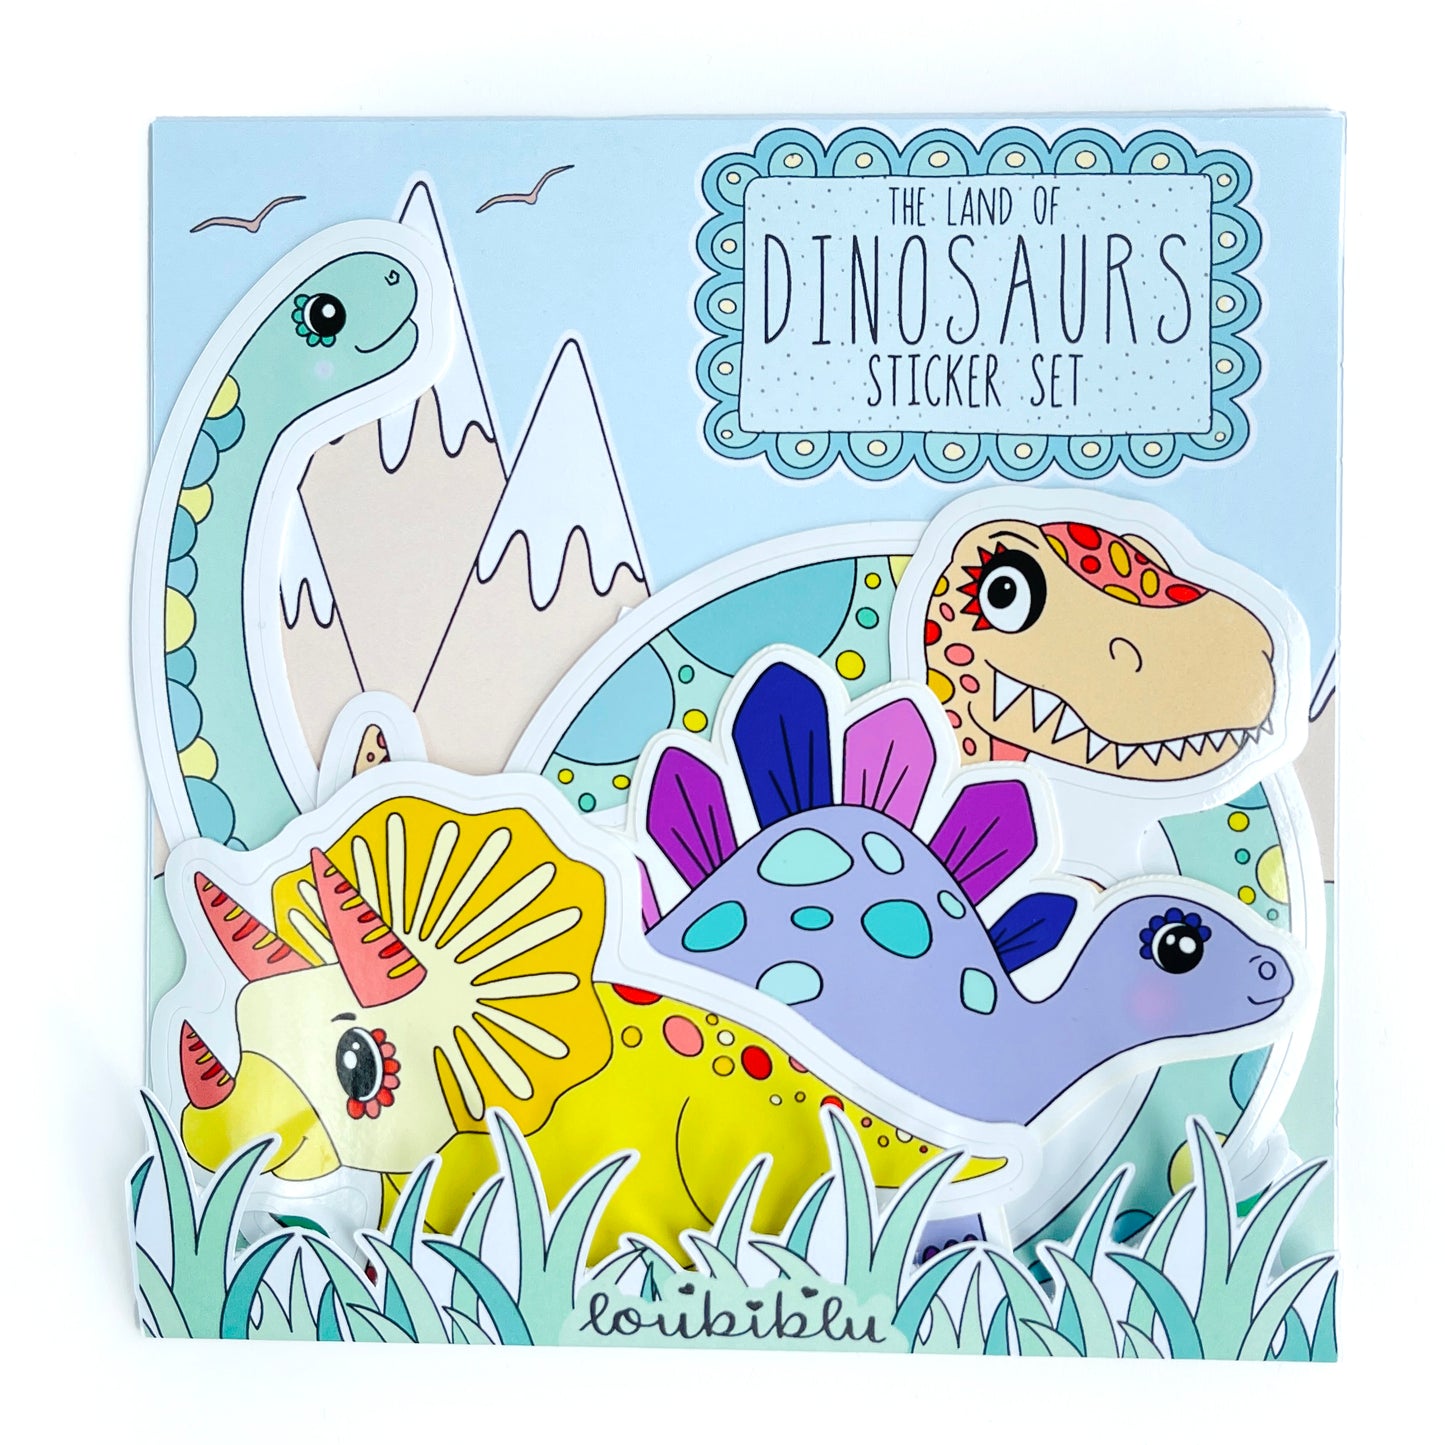 Dinosaur stickers - Loubiblu